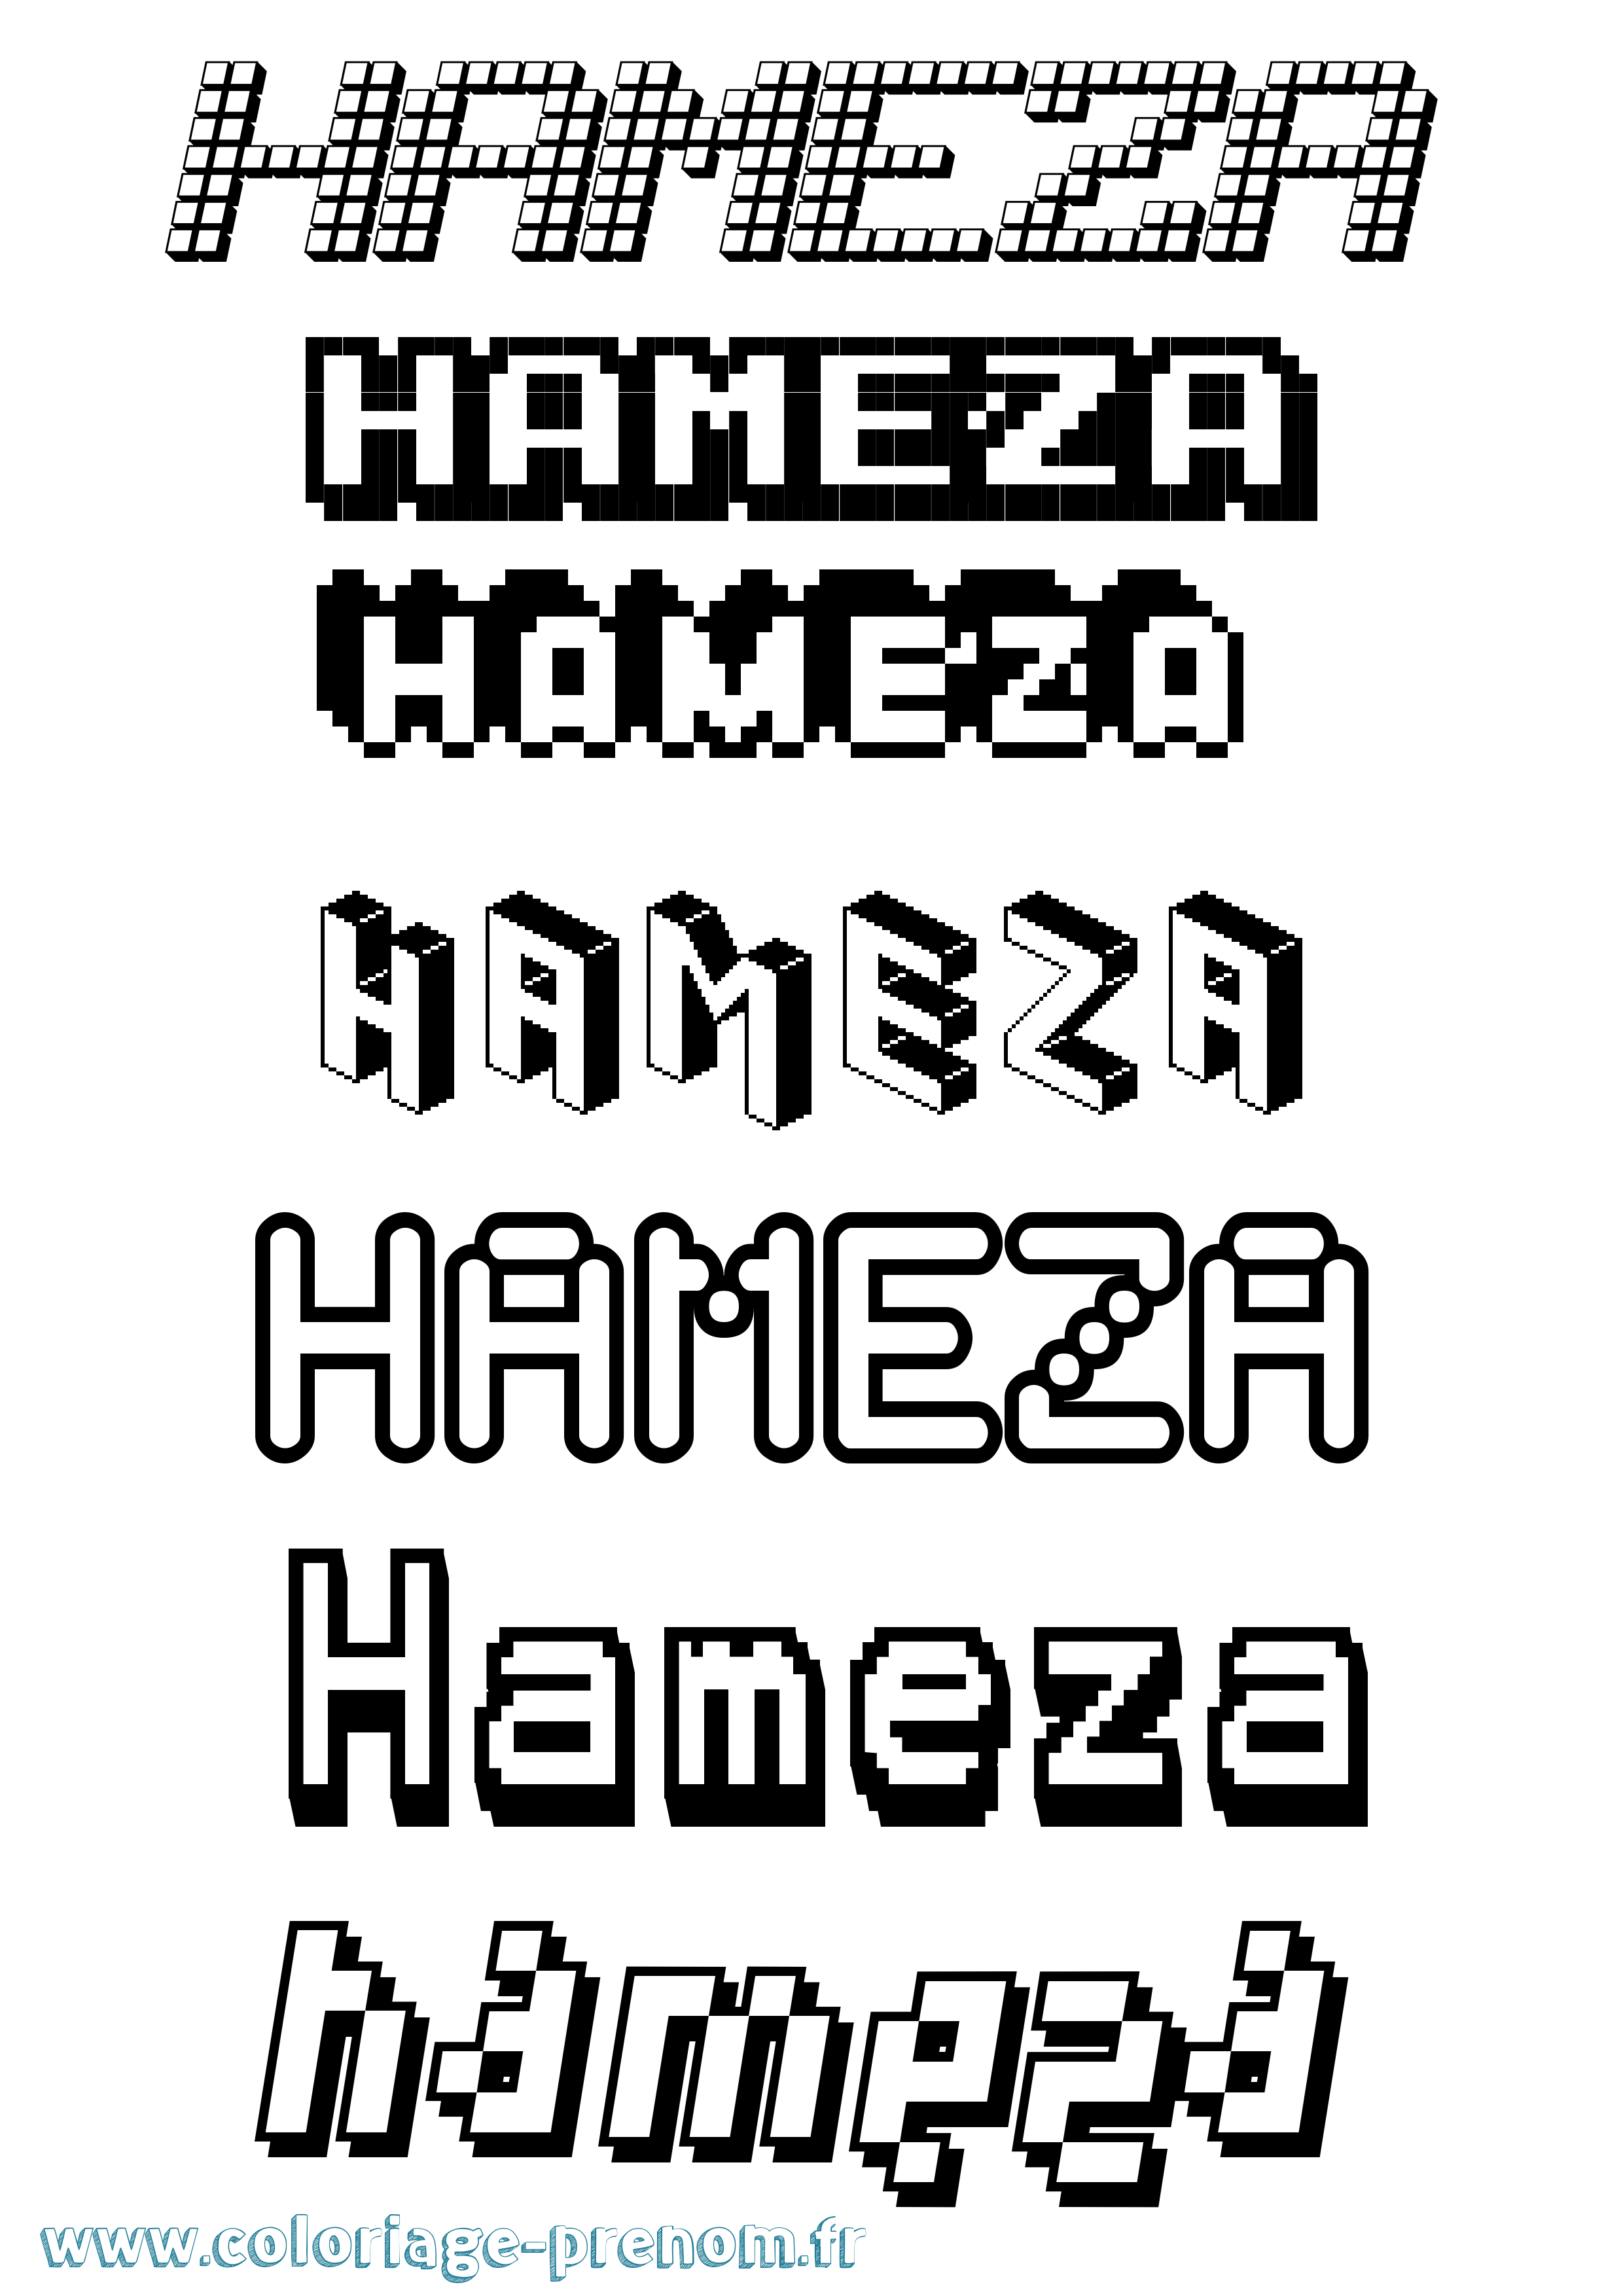 Coloriage prénom Hameza Pixel